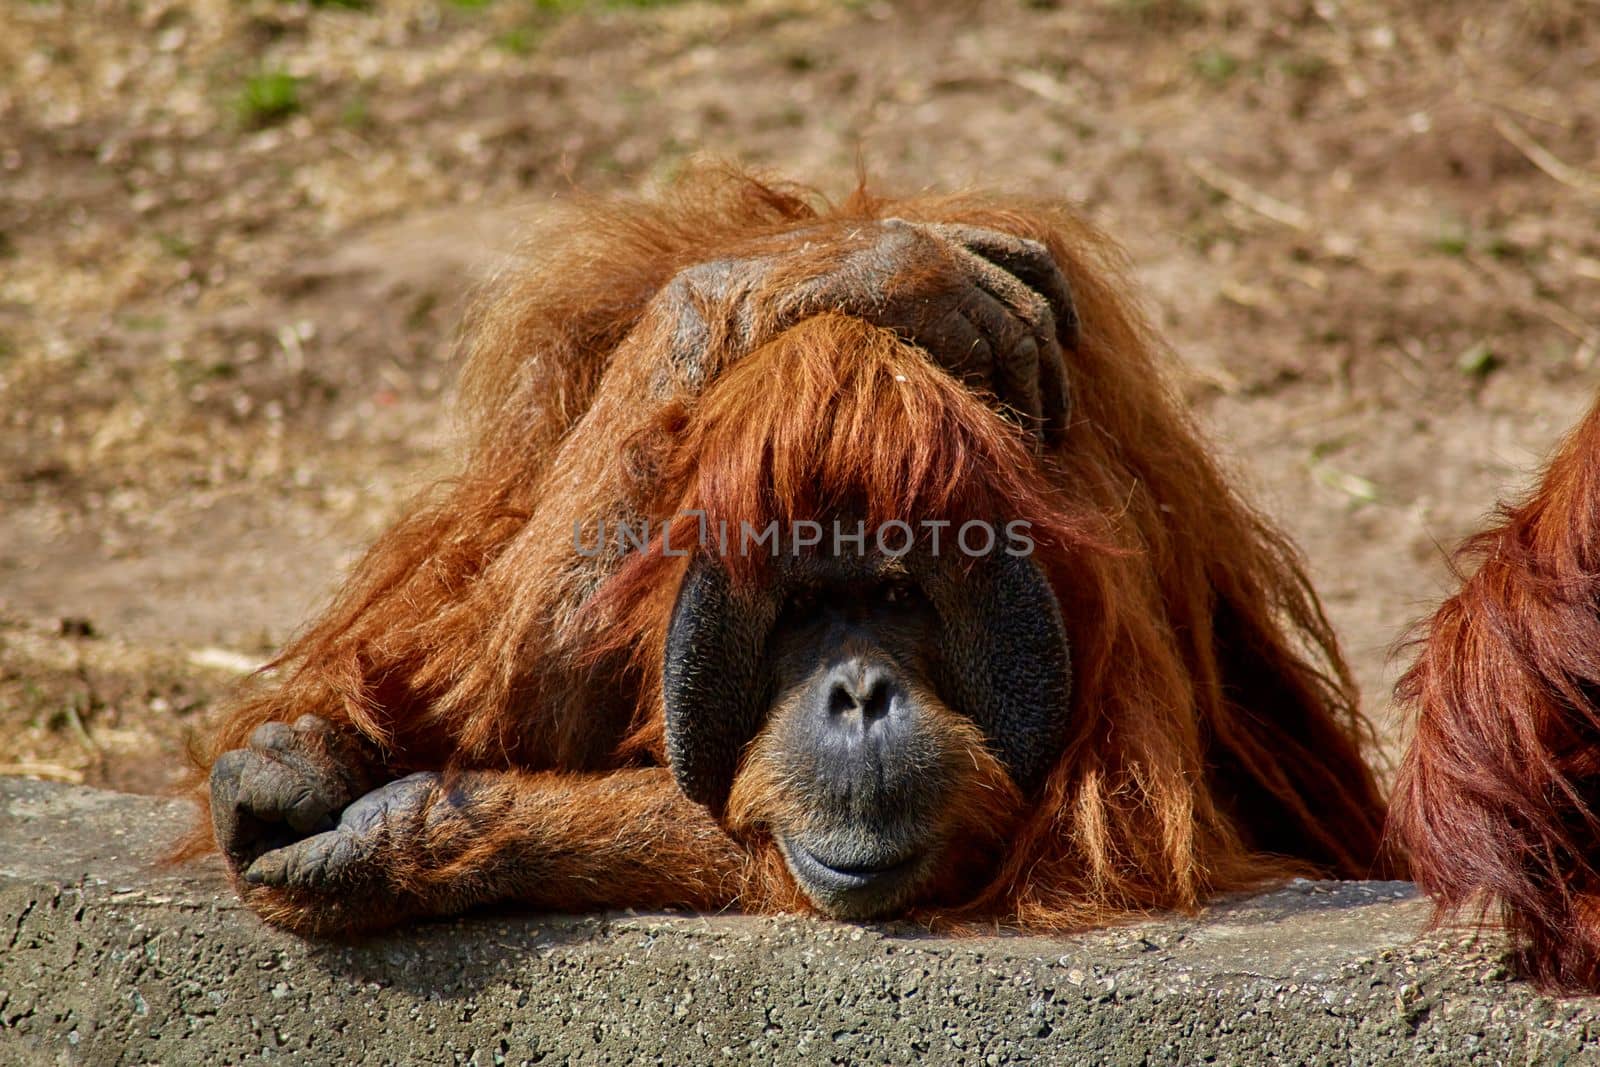 bored pensive orangutan in the open-air zoo.